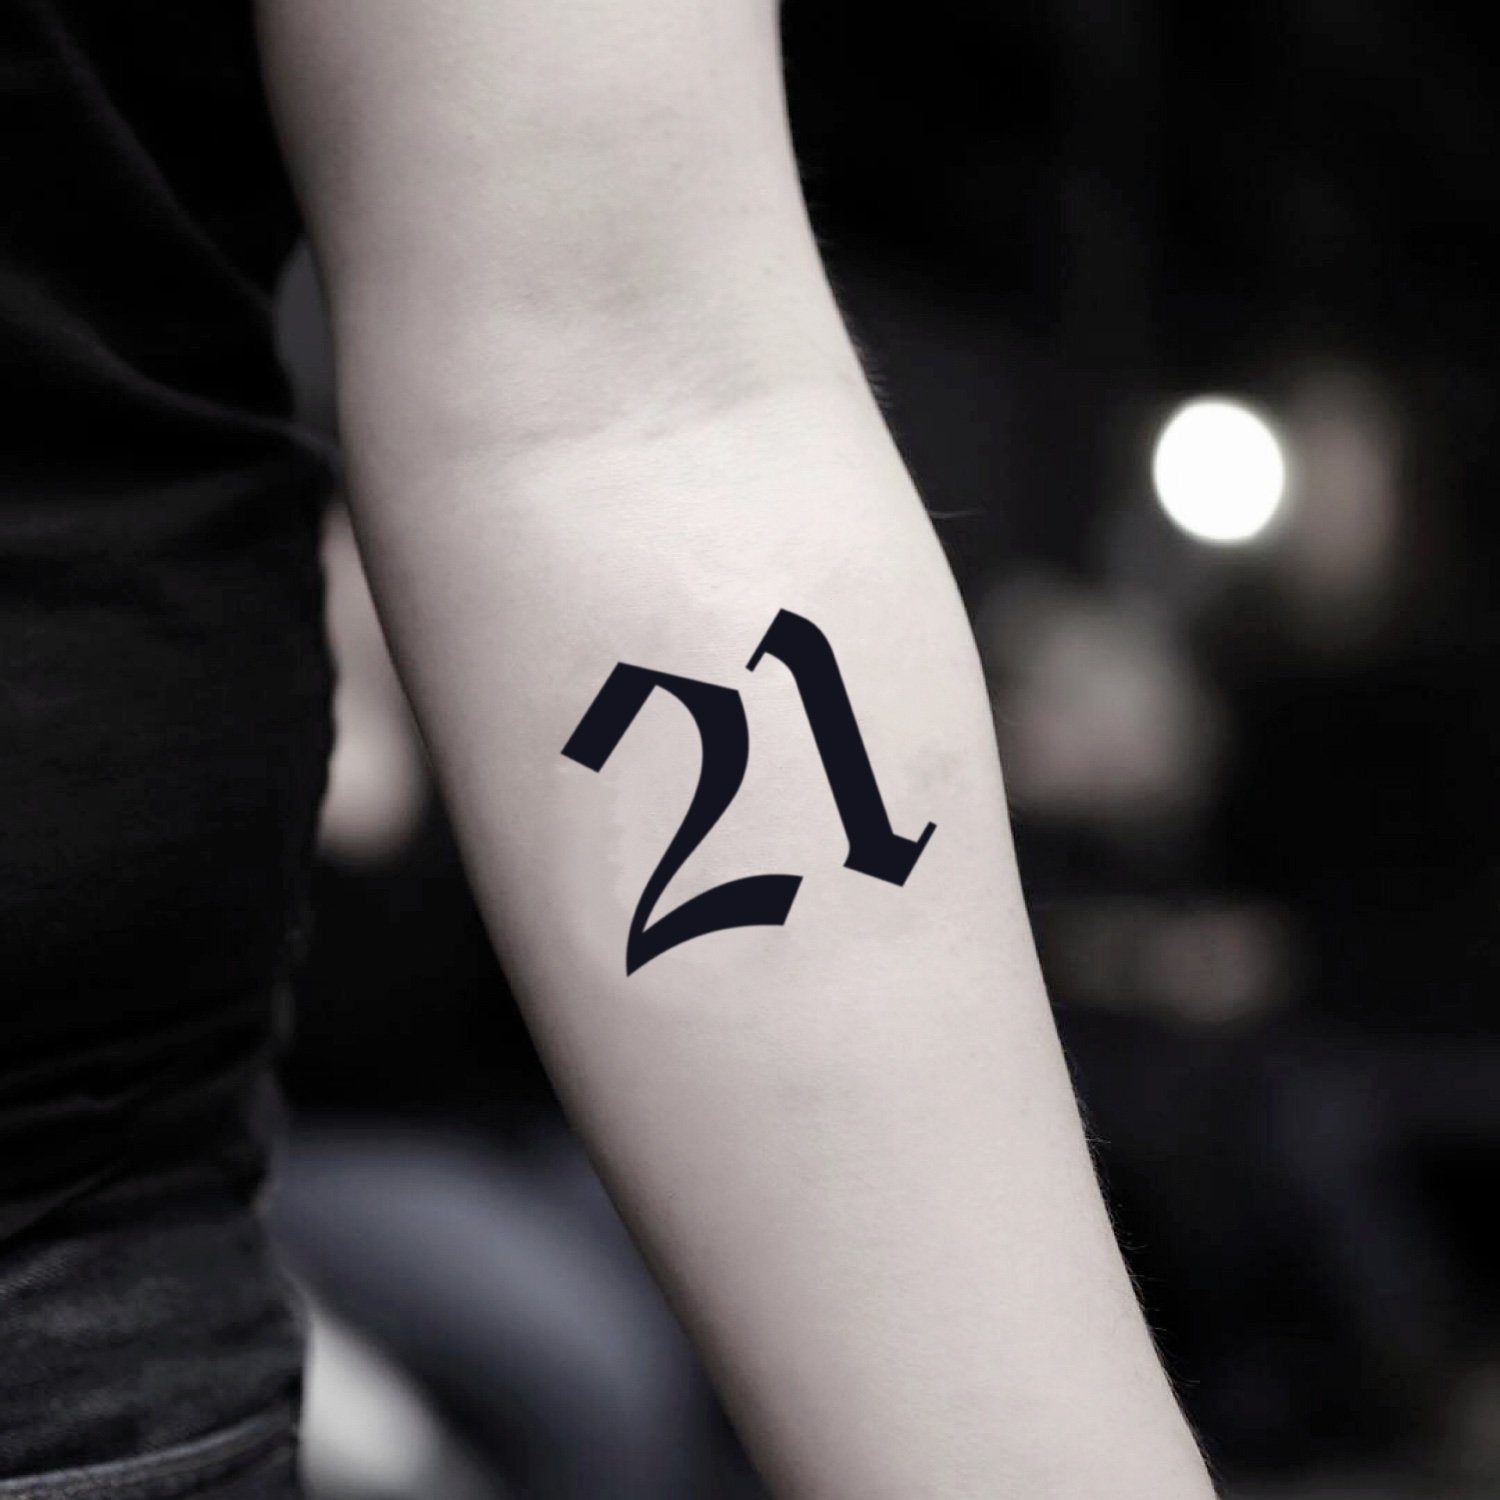 21 Temporary Tattoo Sticker - OhMyTat